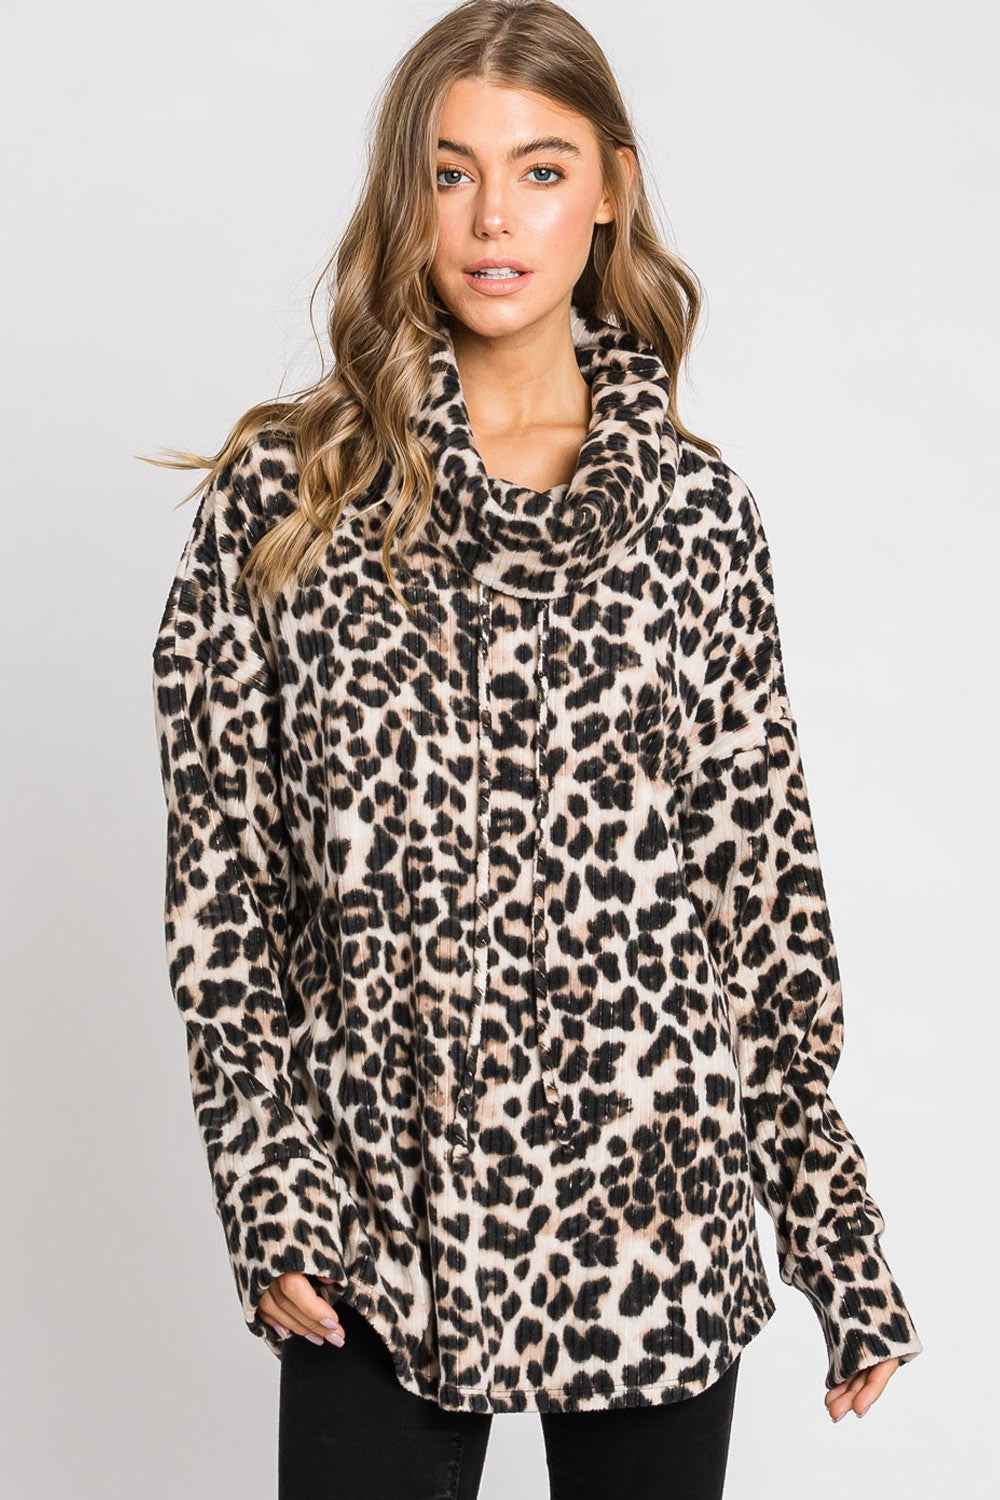 Warmest Wishes Leopard Cowl Neck Top